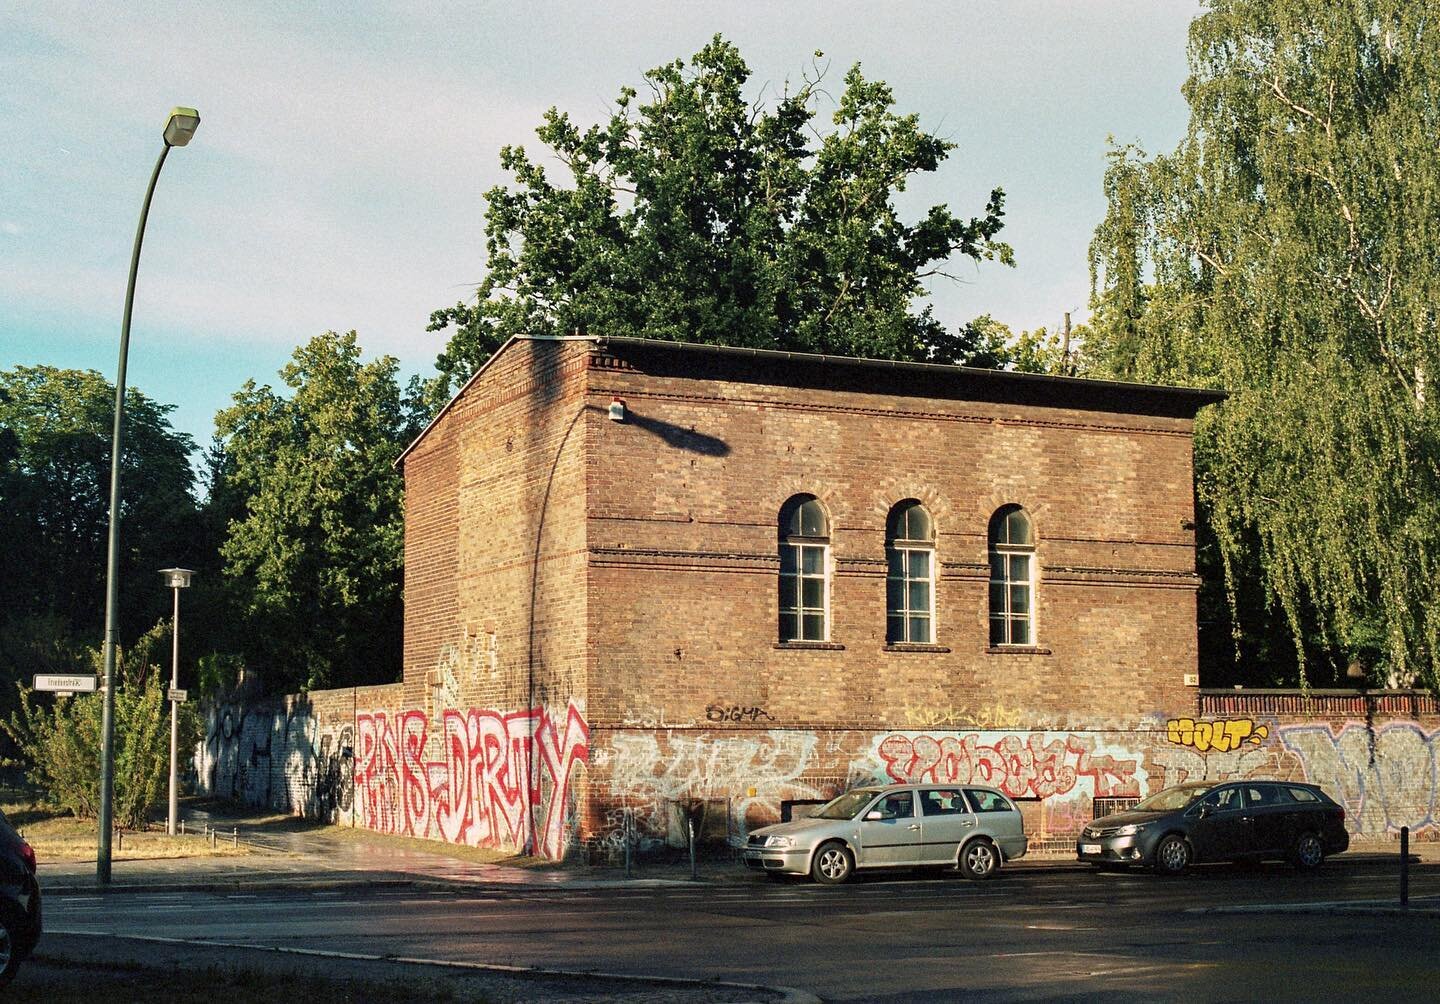 Back at it. Friedenstr &amp; Koppenstr, Berlin
19:30 6 July 2020
.
.
.

#germany&nbsp;#berlinarchitecture&nbsp;#urbanexploration&nbsp;#ihavethisthingwithberlin #visit_berlin&nbsp;#berlinstyle&nbsp;#architecturephotography #berlin&nbsp; #fhain&nbsp;#f